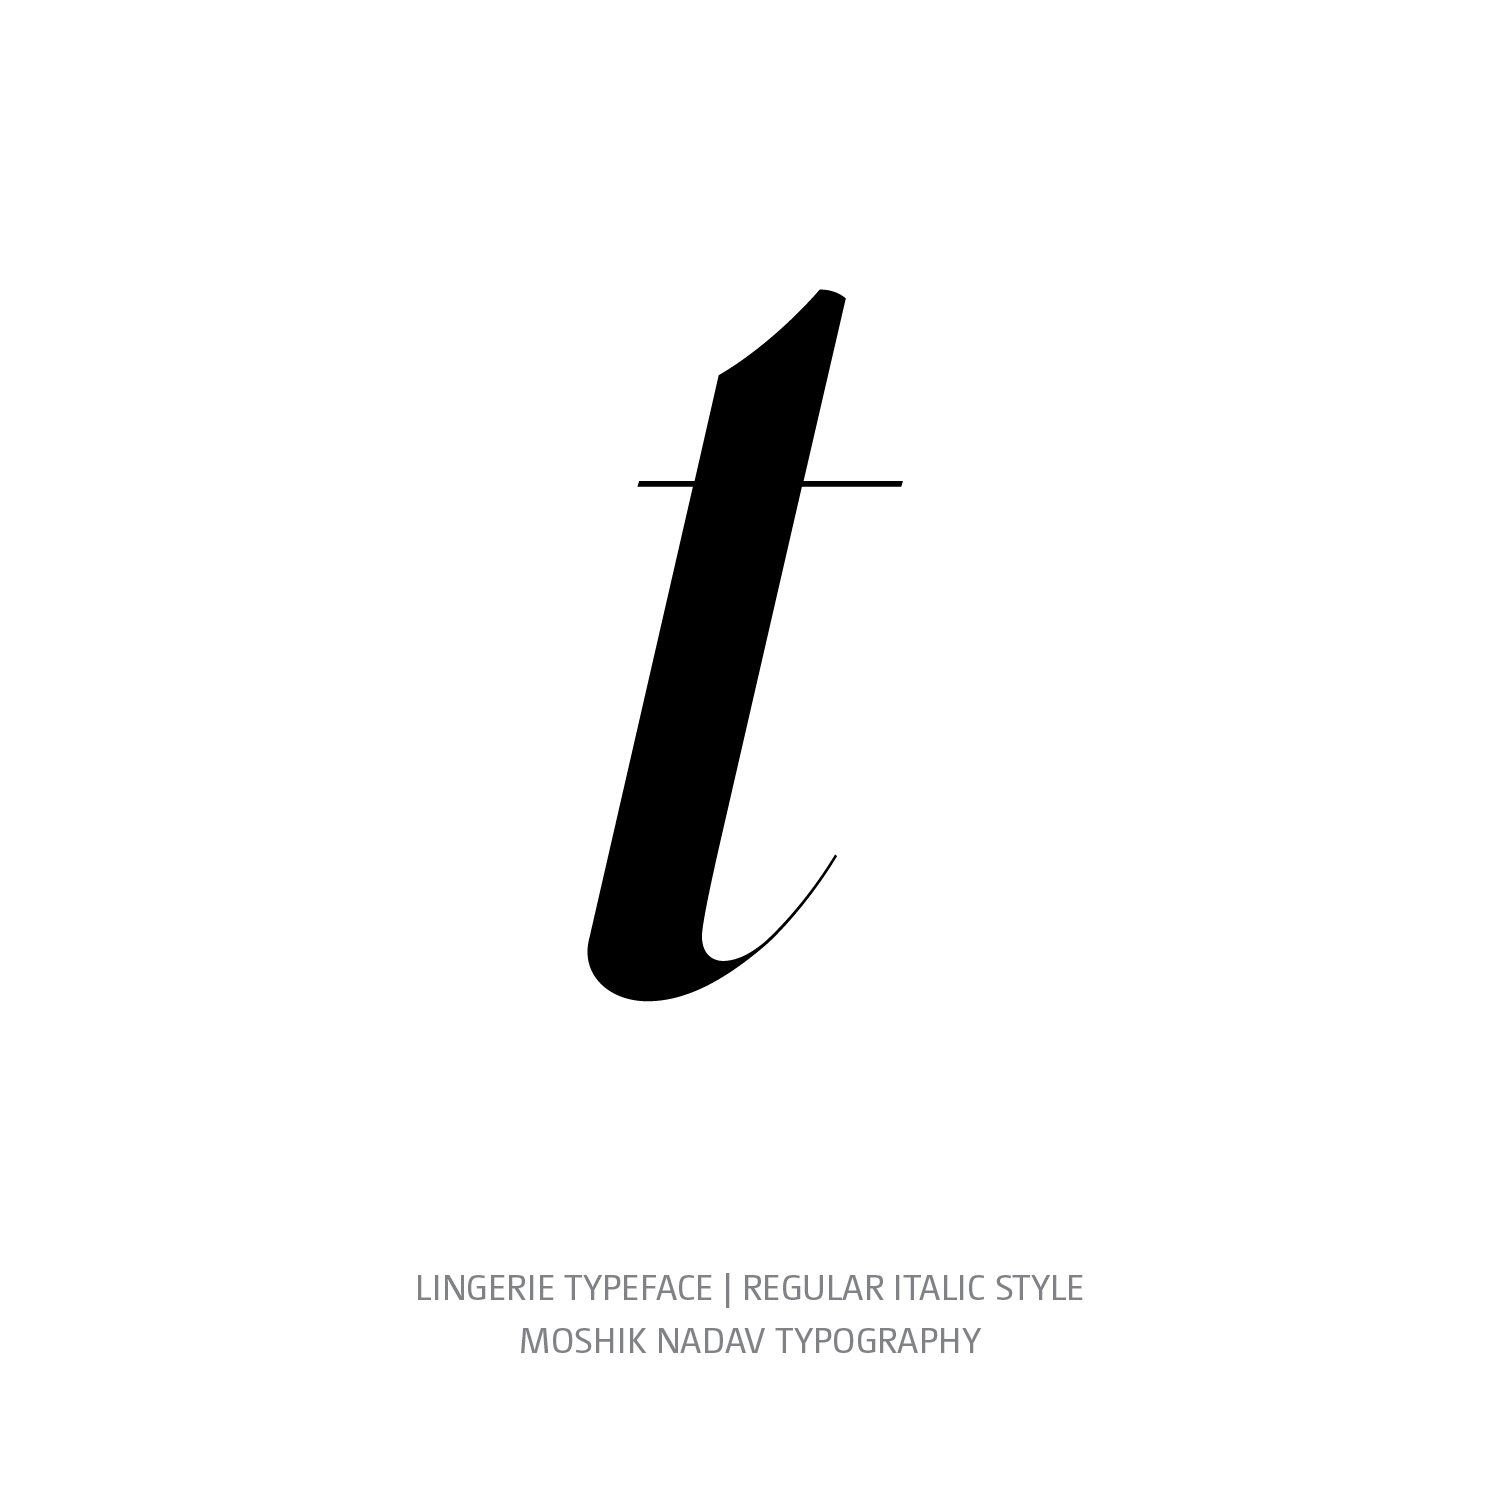 Lingerie Typeface Regular Italic t - Fashion fonts by Moshik Nadav Typography